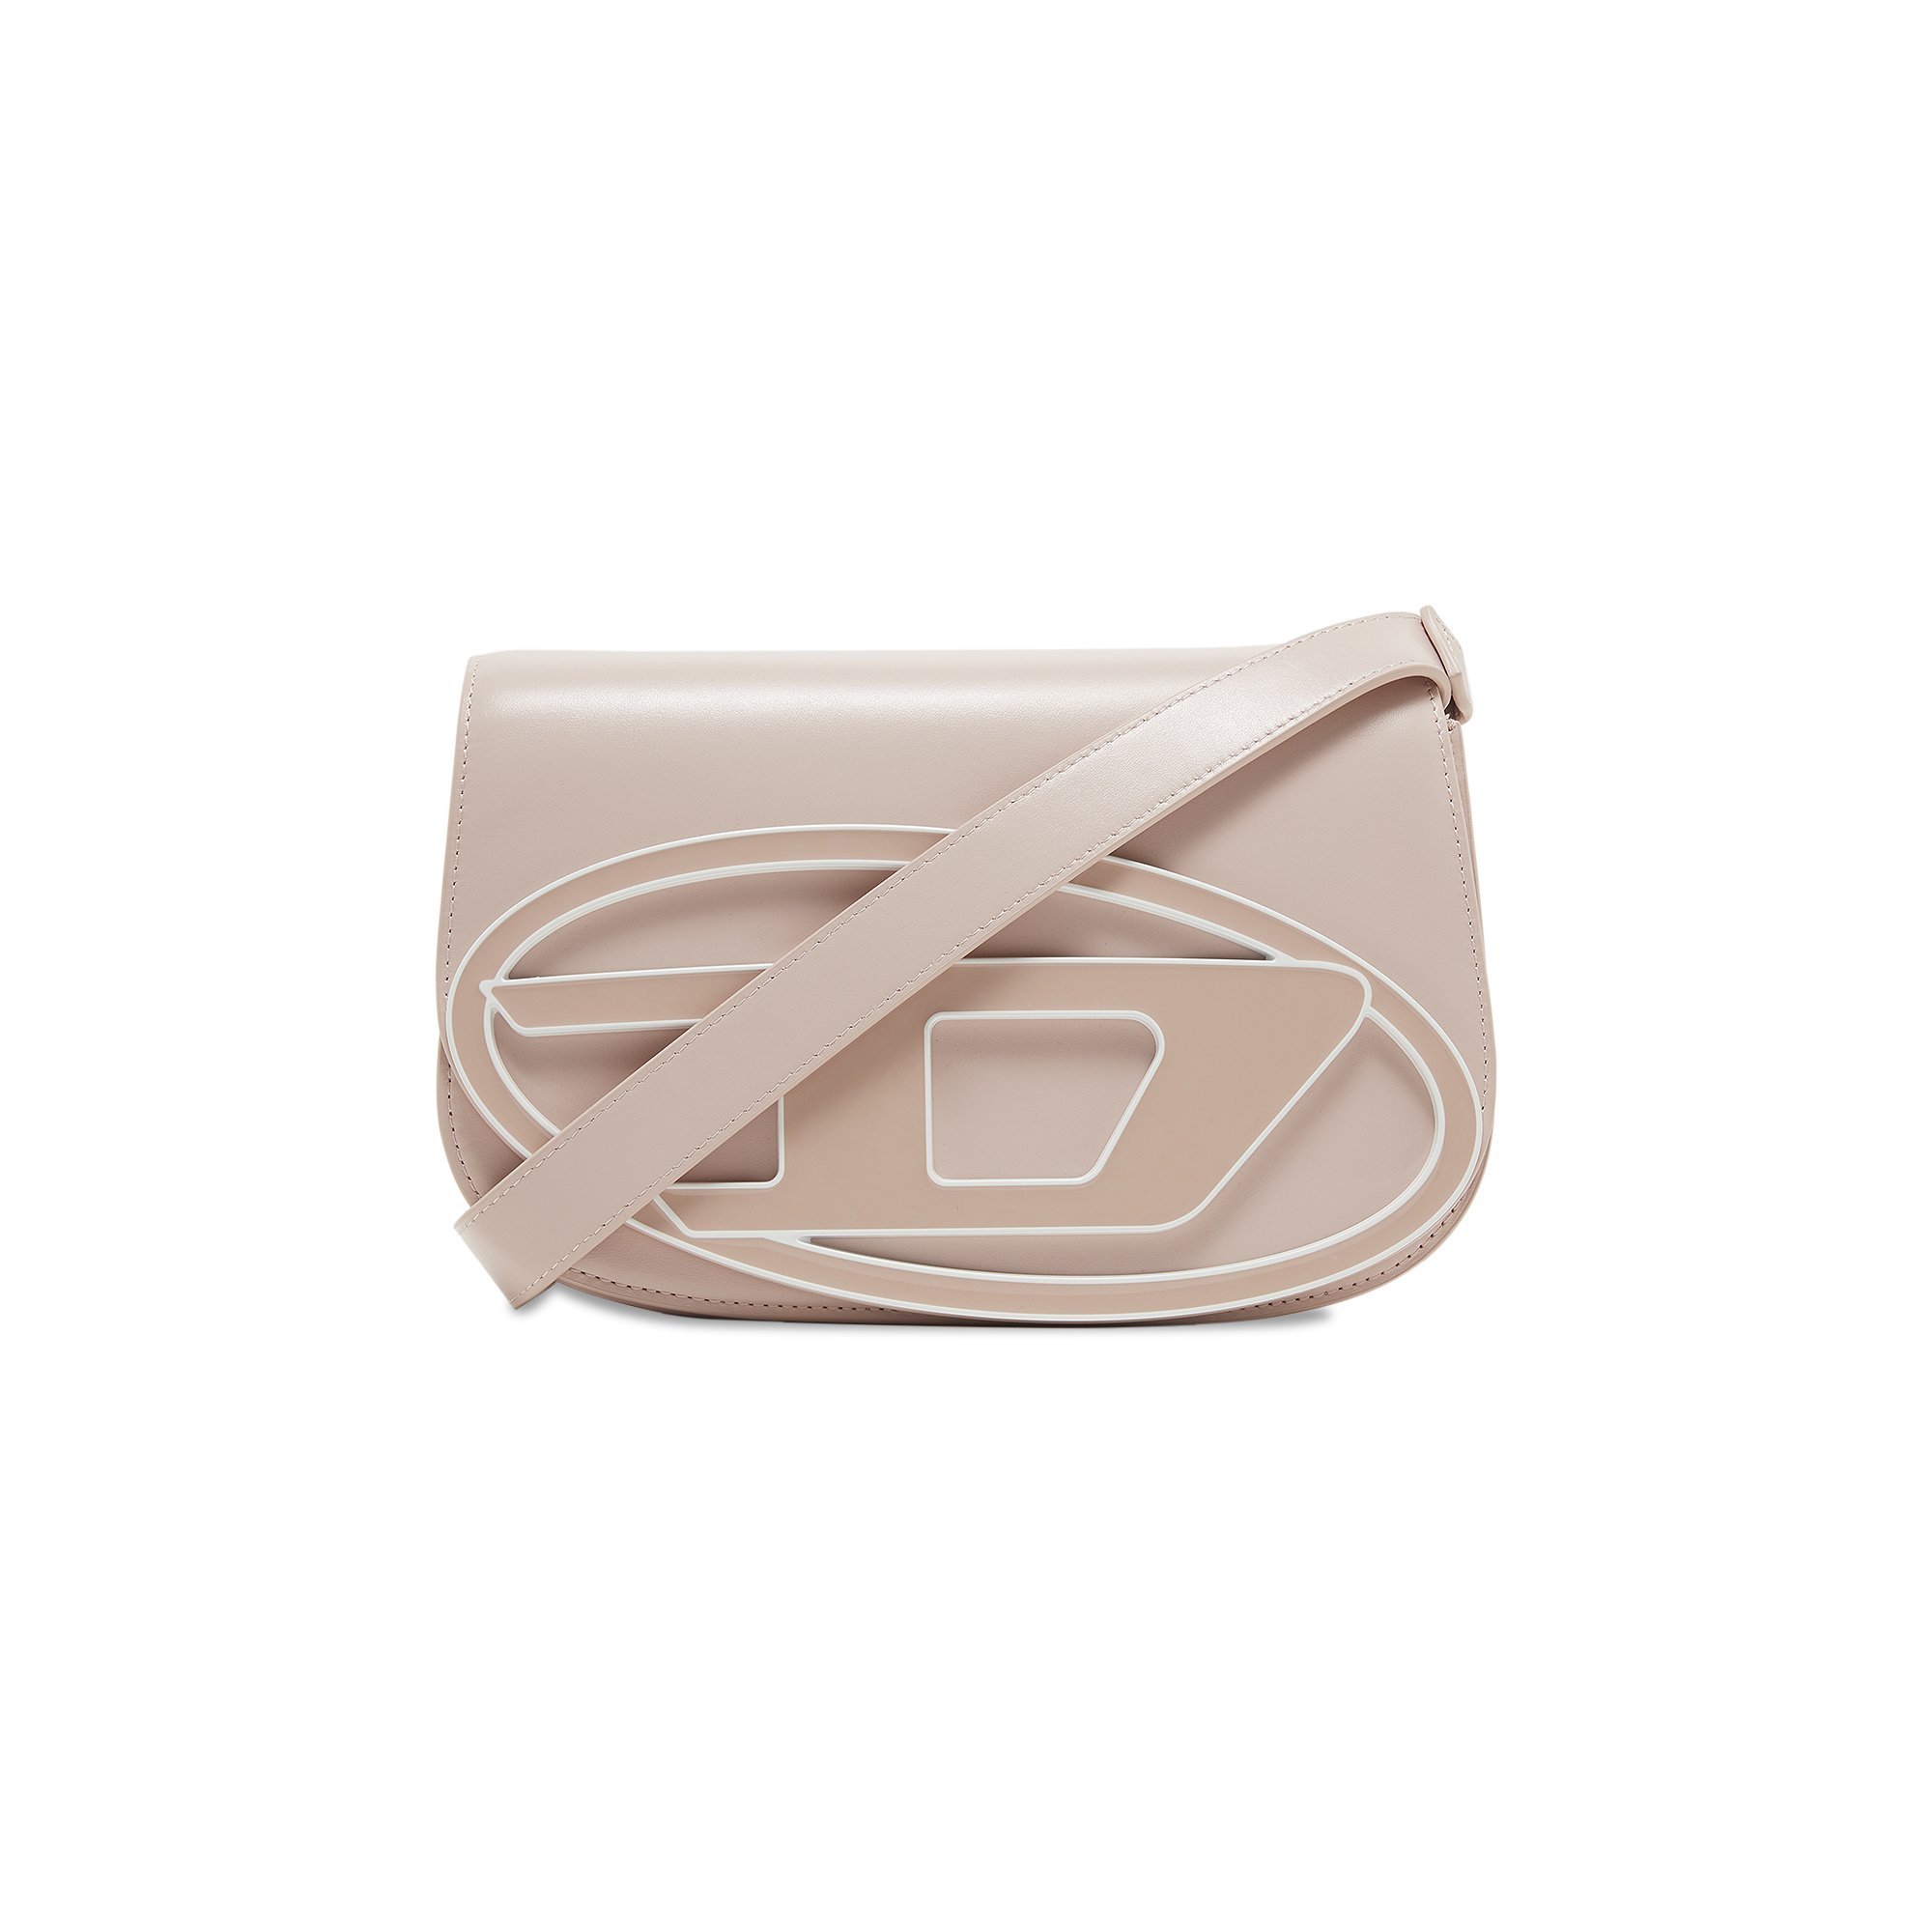 Buy Diesel 1DR M Iconic Bag 'Pink' - X09568 P6316 T4260 | GOAT CA